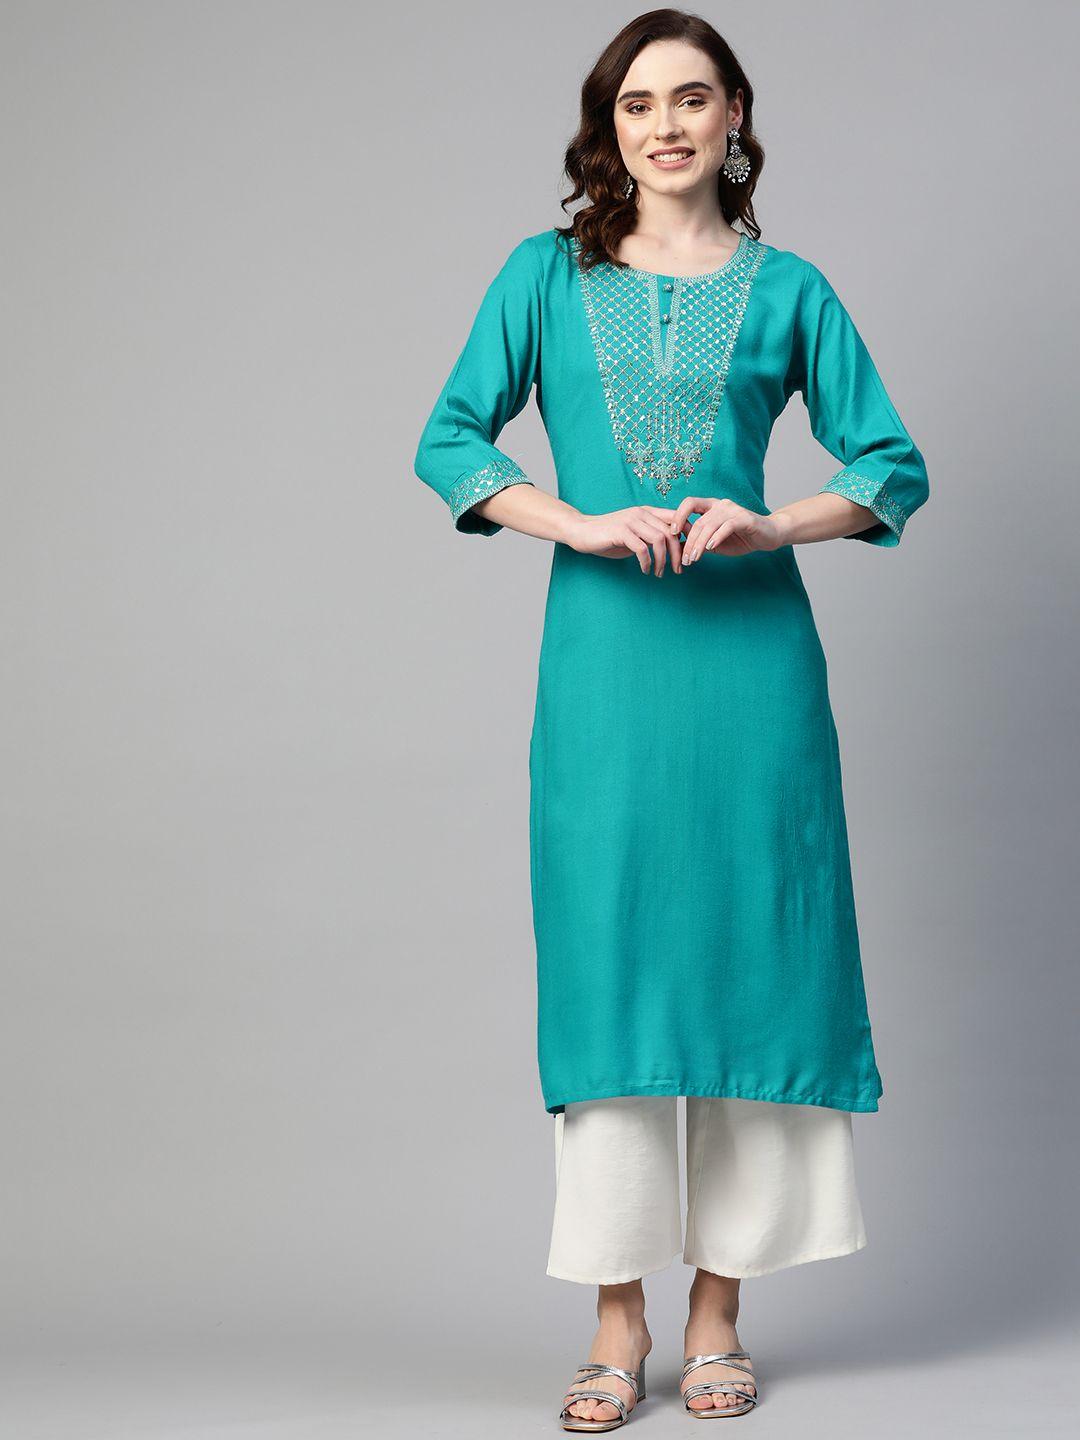 readiprint fashions women turquoise blue ethnic motifs embellished kurta